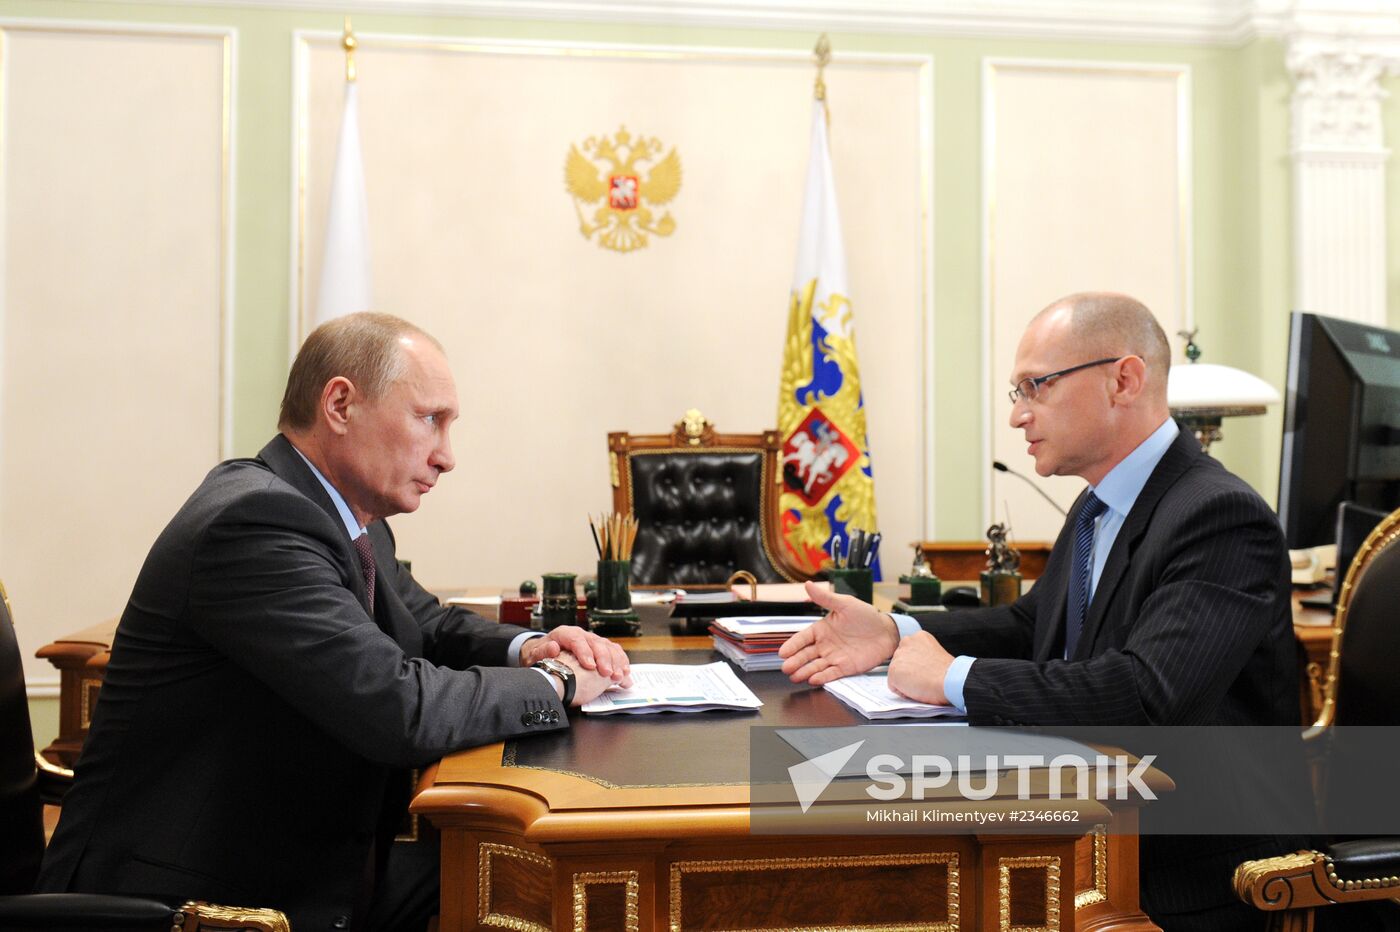 Vladimir Putin meets with Sergei Kiriyenko